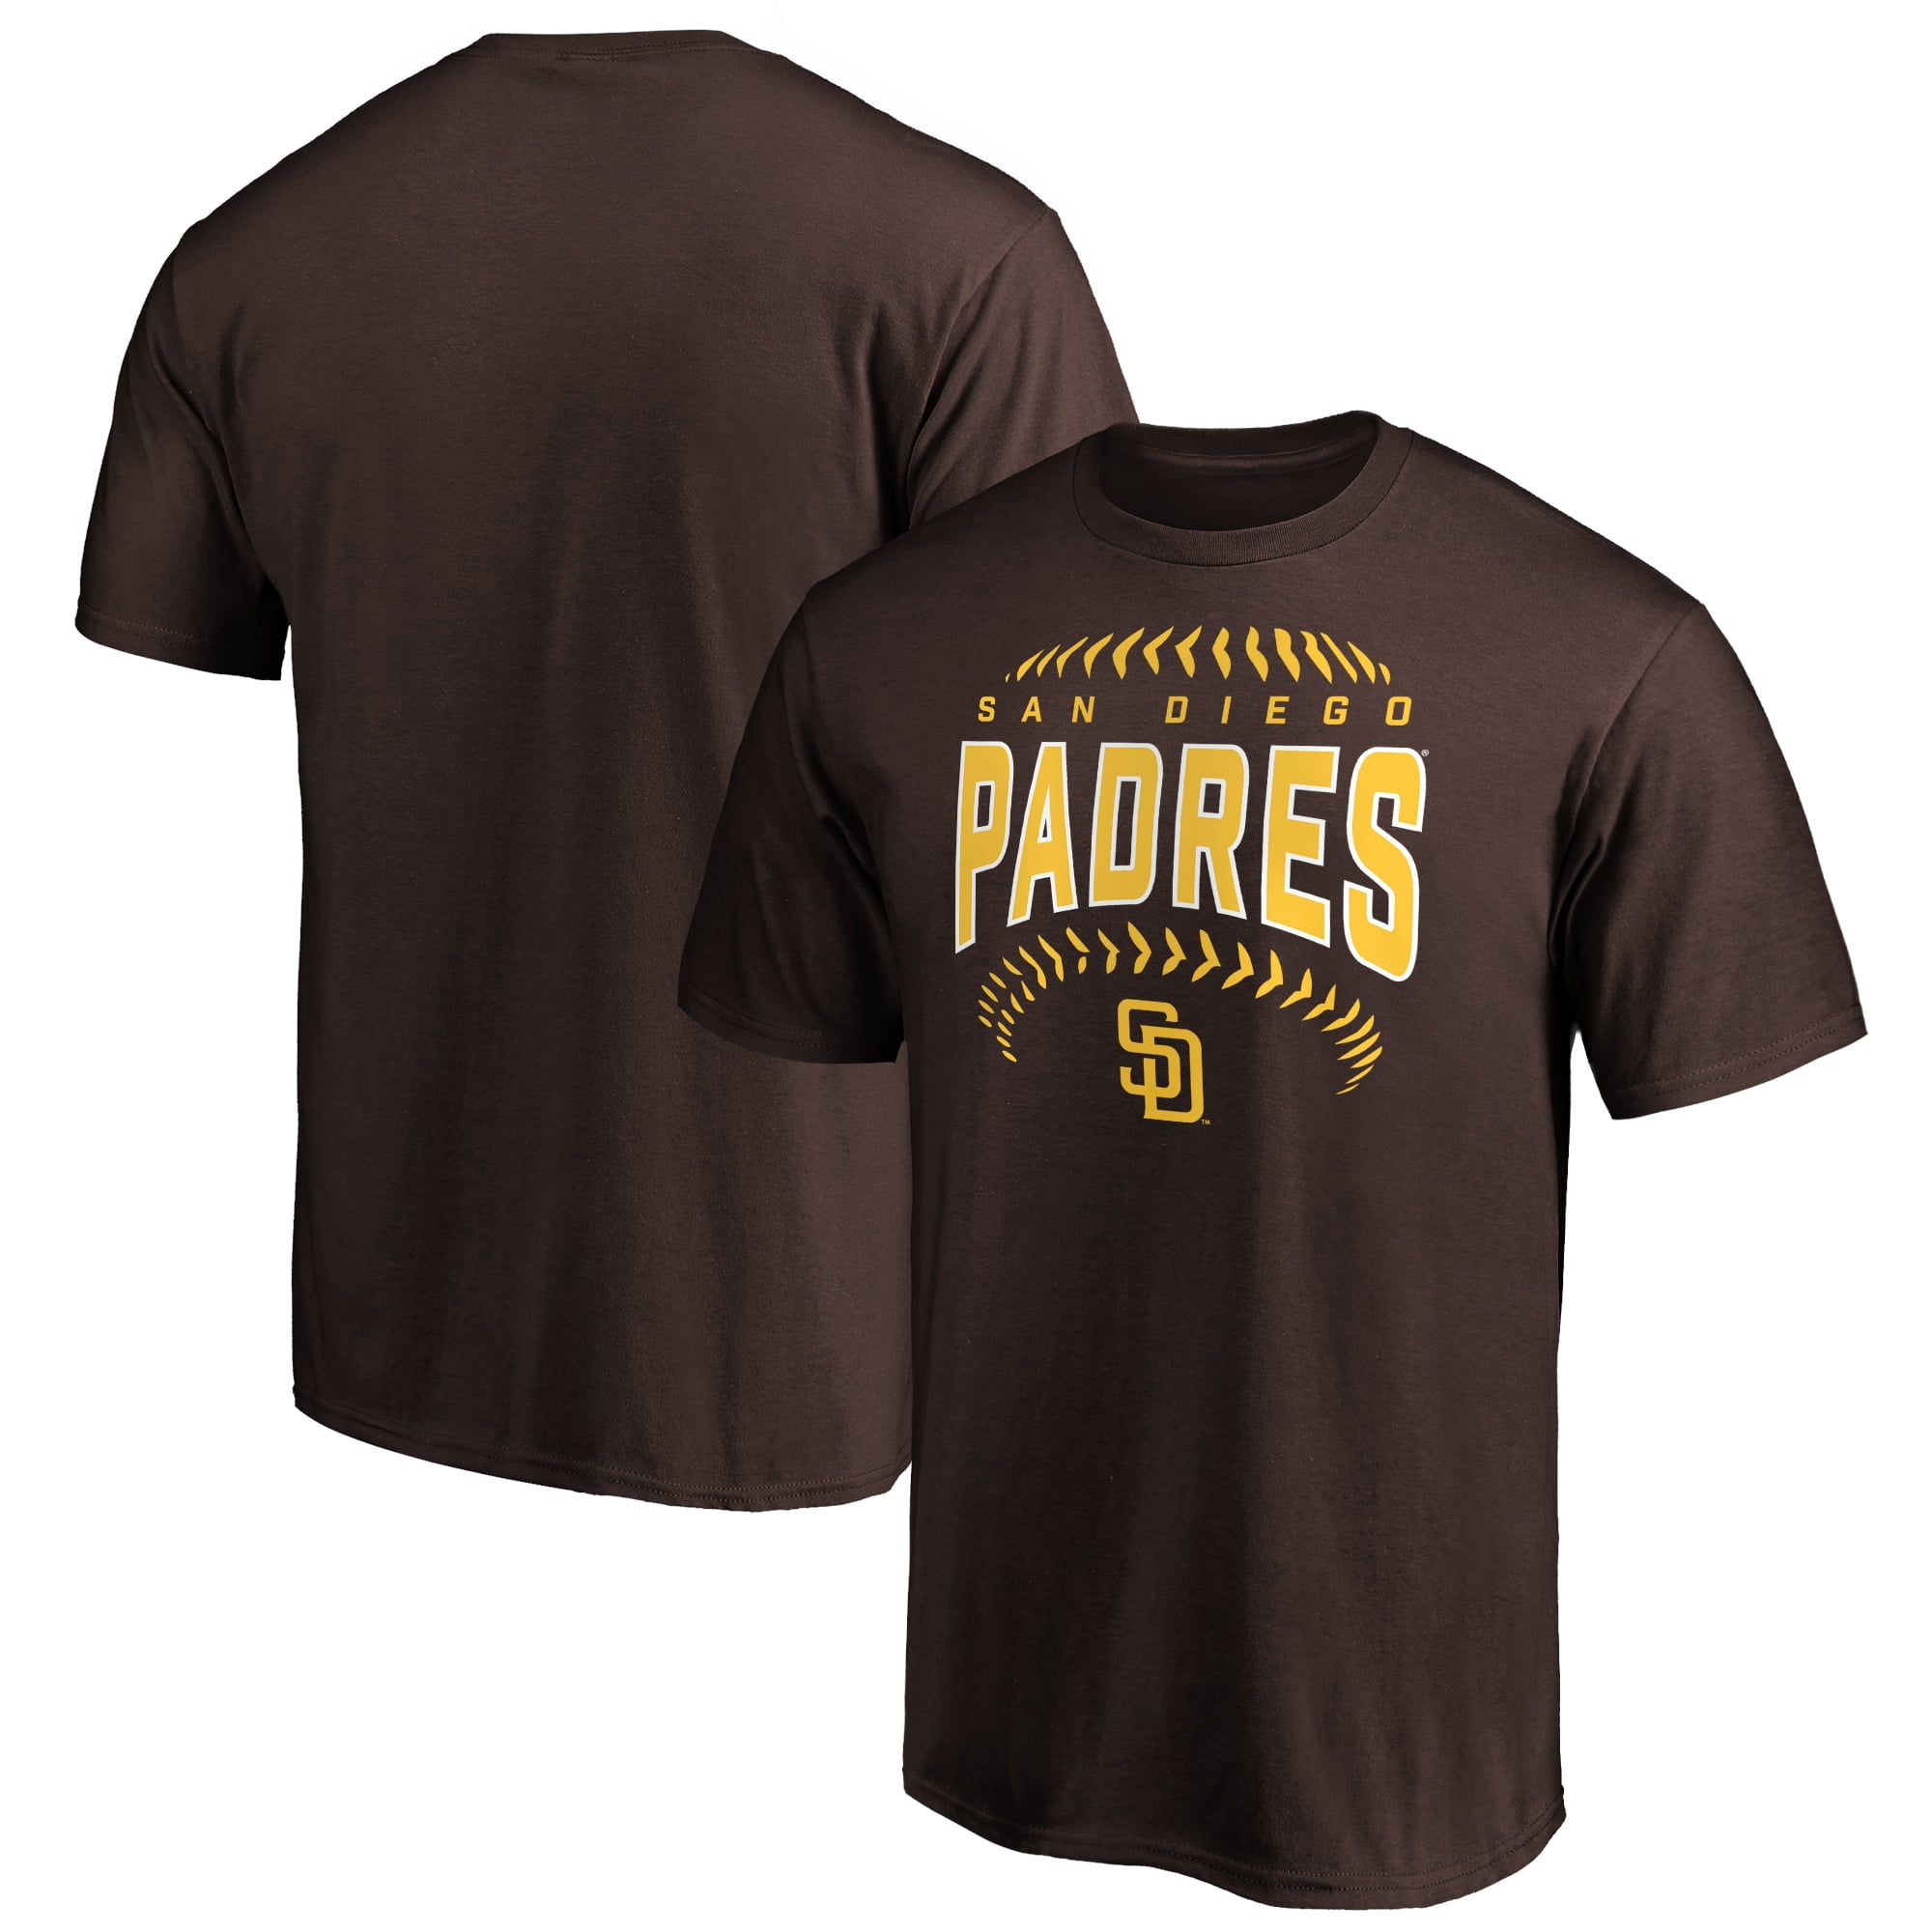 Men's Fanatics Branded Brown San Diego Padres Adrenaline Zone T-Shirt 